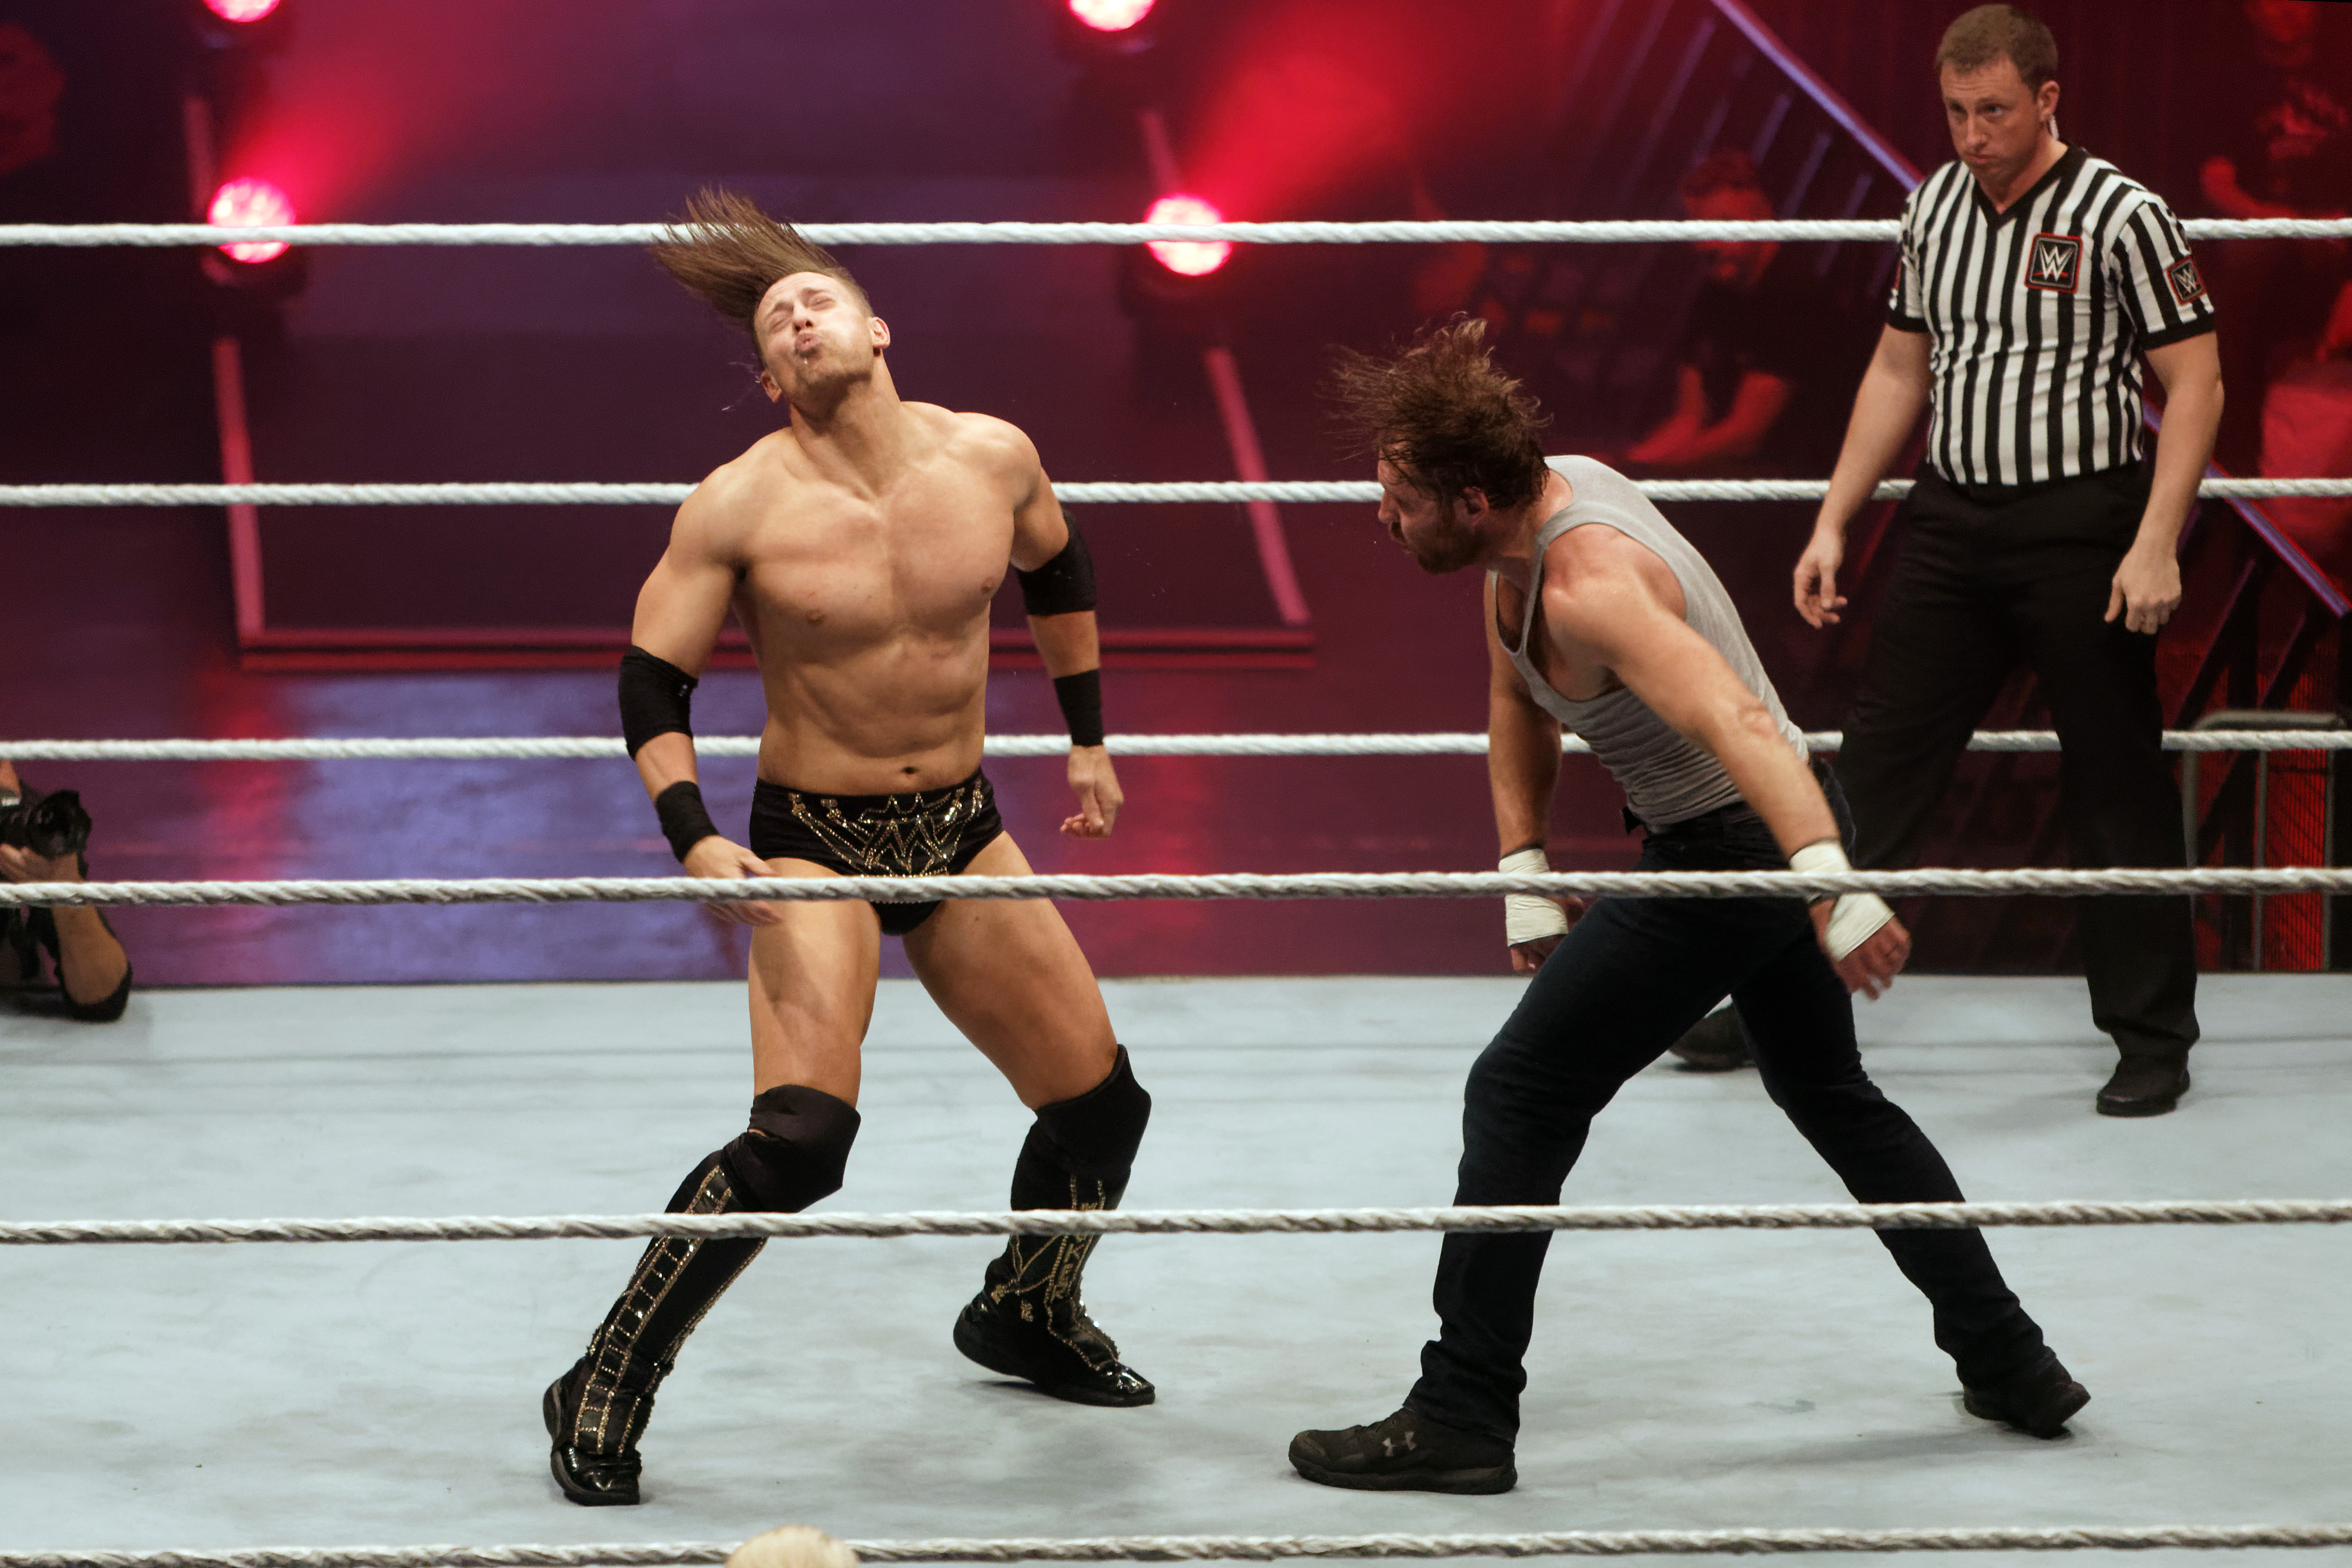 The Miz vs Dean Ambrose